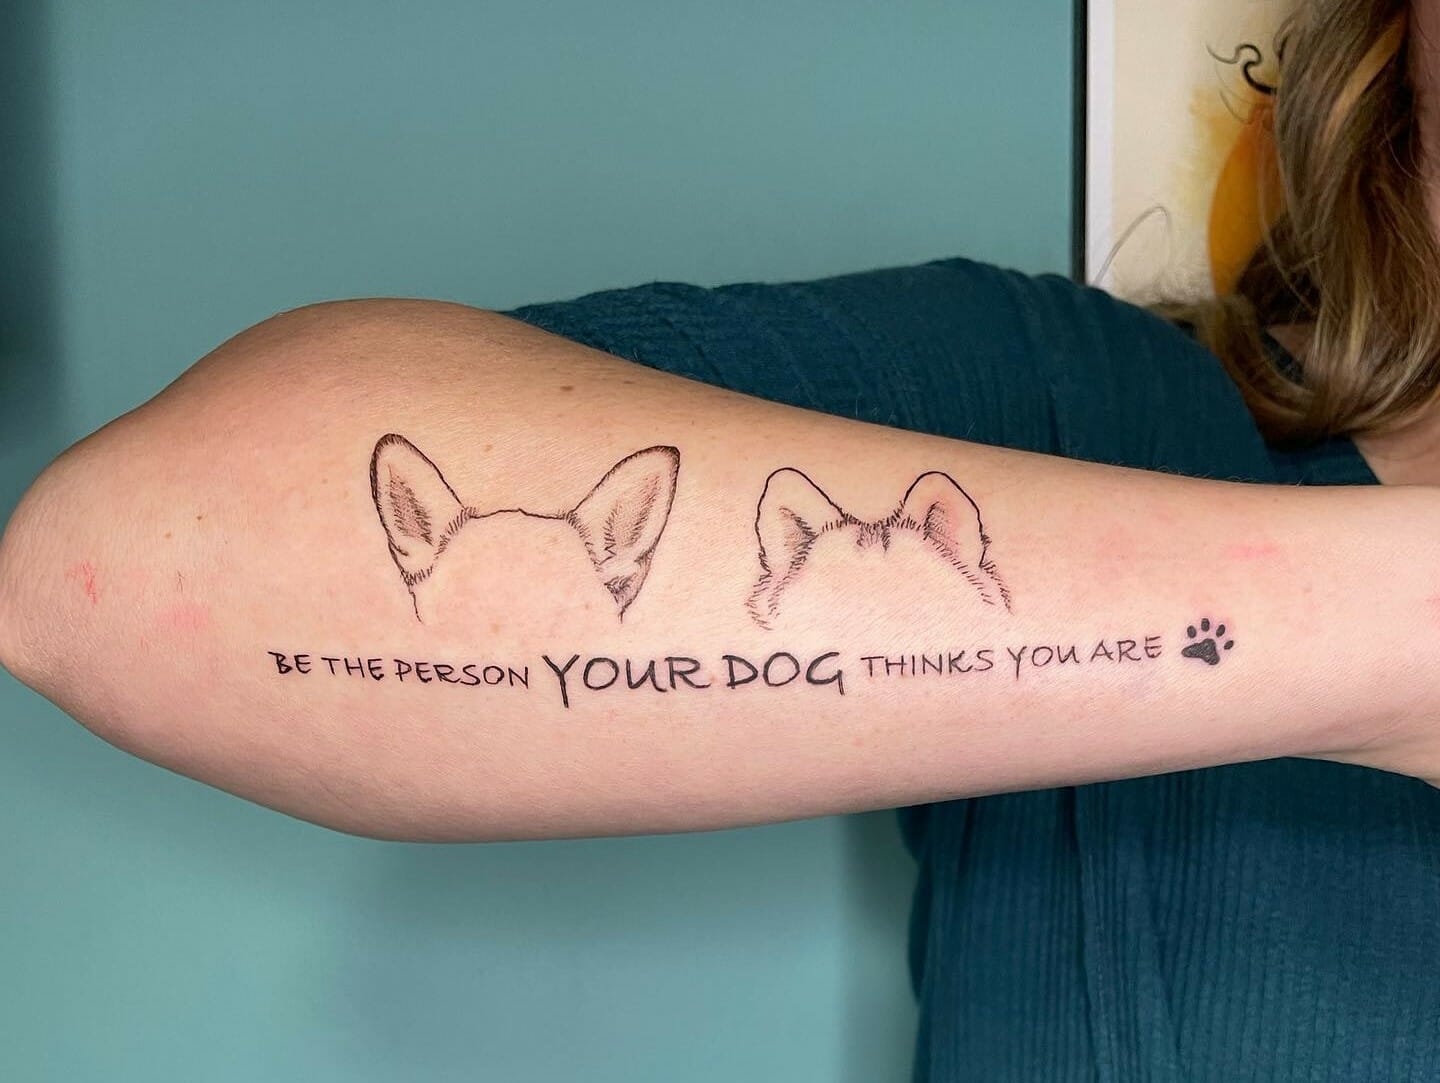 Minimalist dog ears tattoo placed on the inner forearm